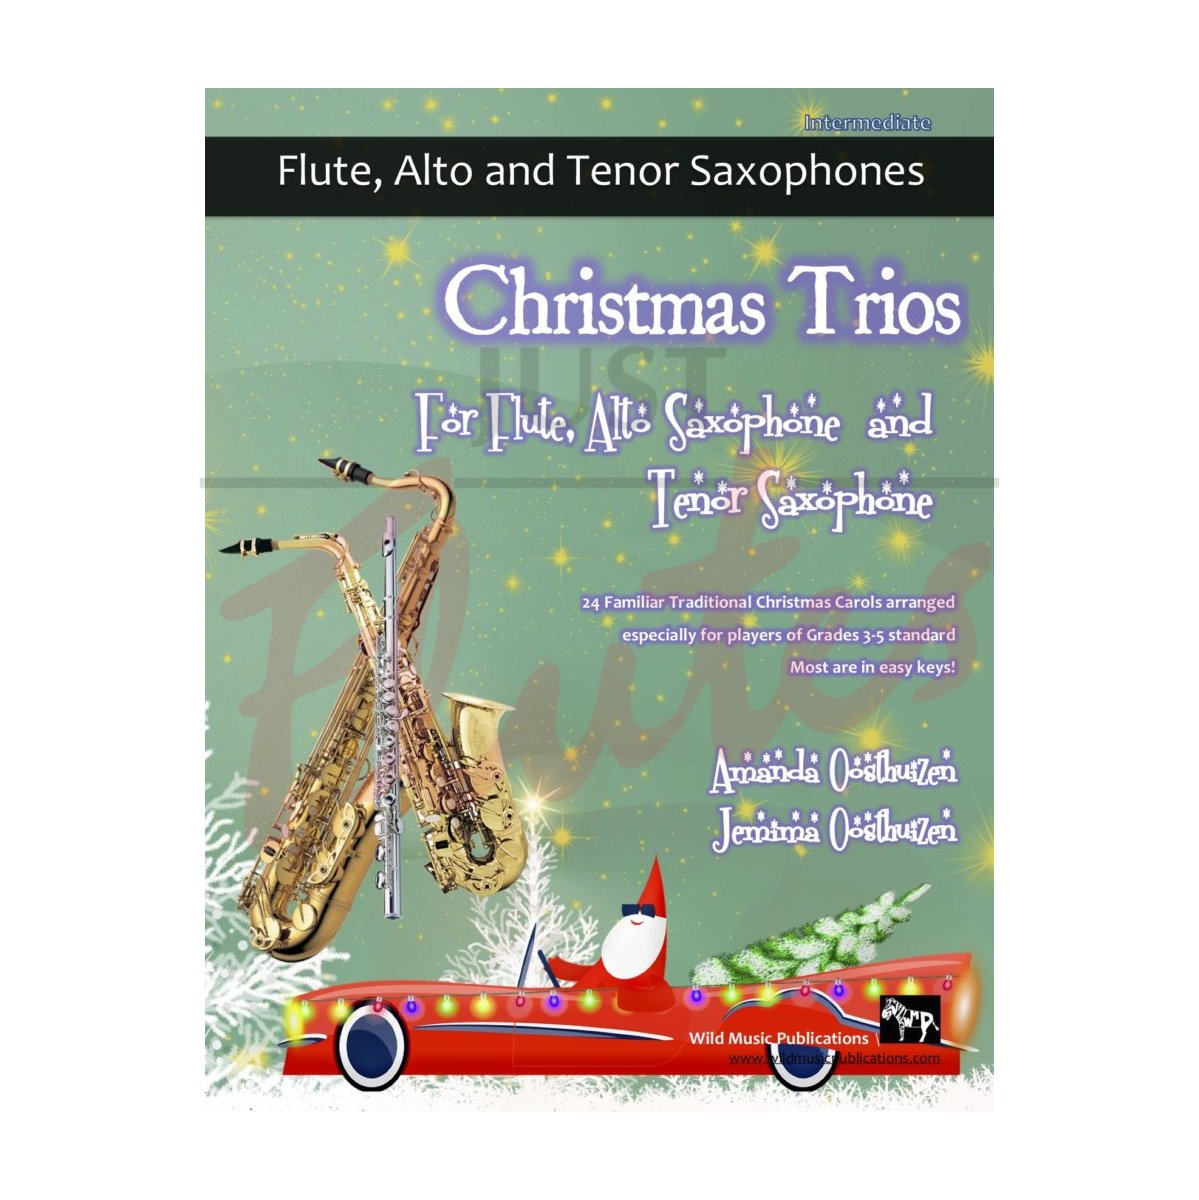 Christmas Trios for Flute, Alto Saxophone and Tenor Saxophone